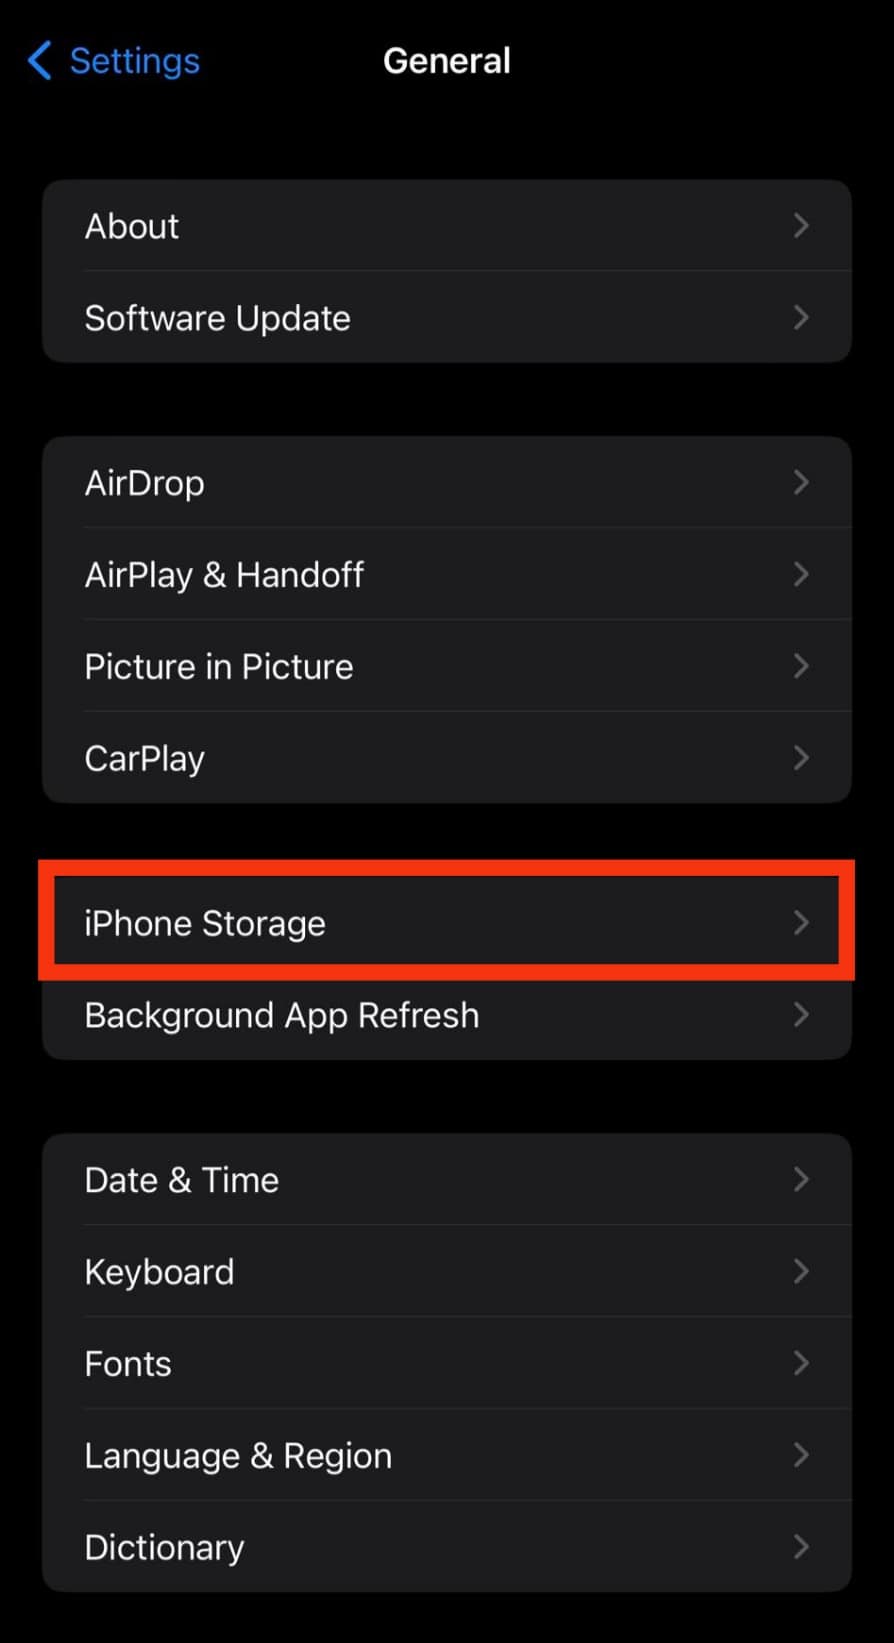 Tap On Iphone Storage